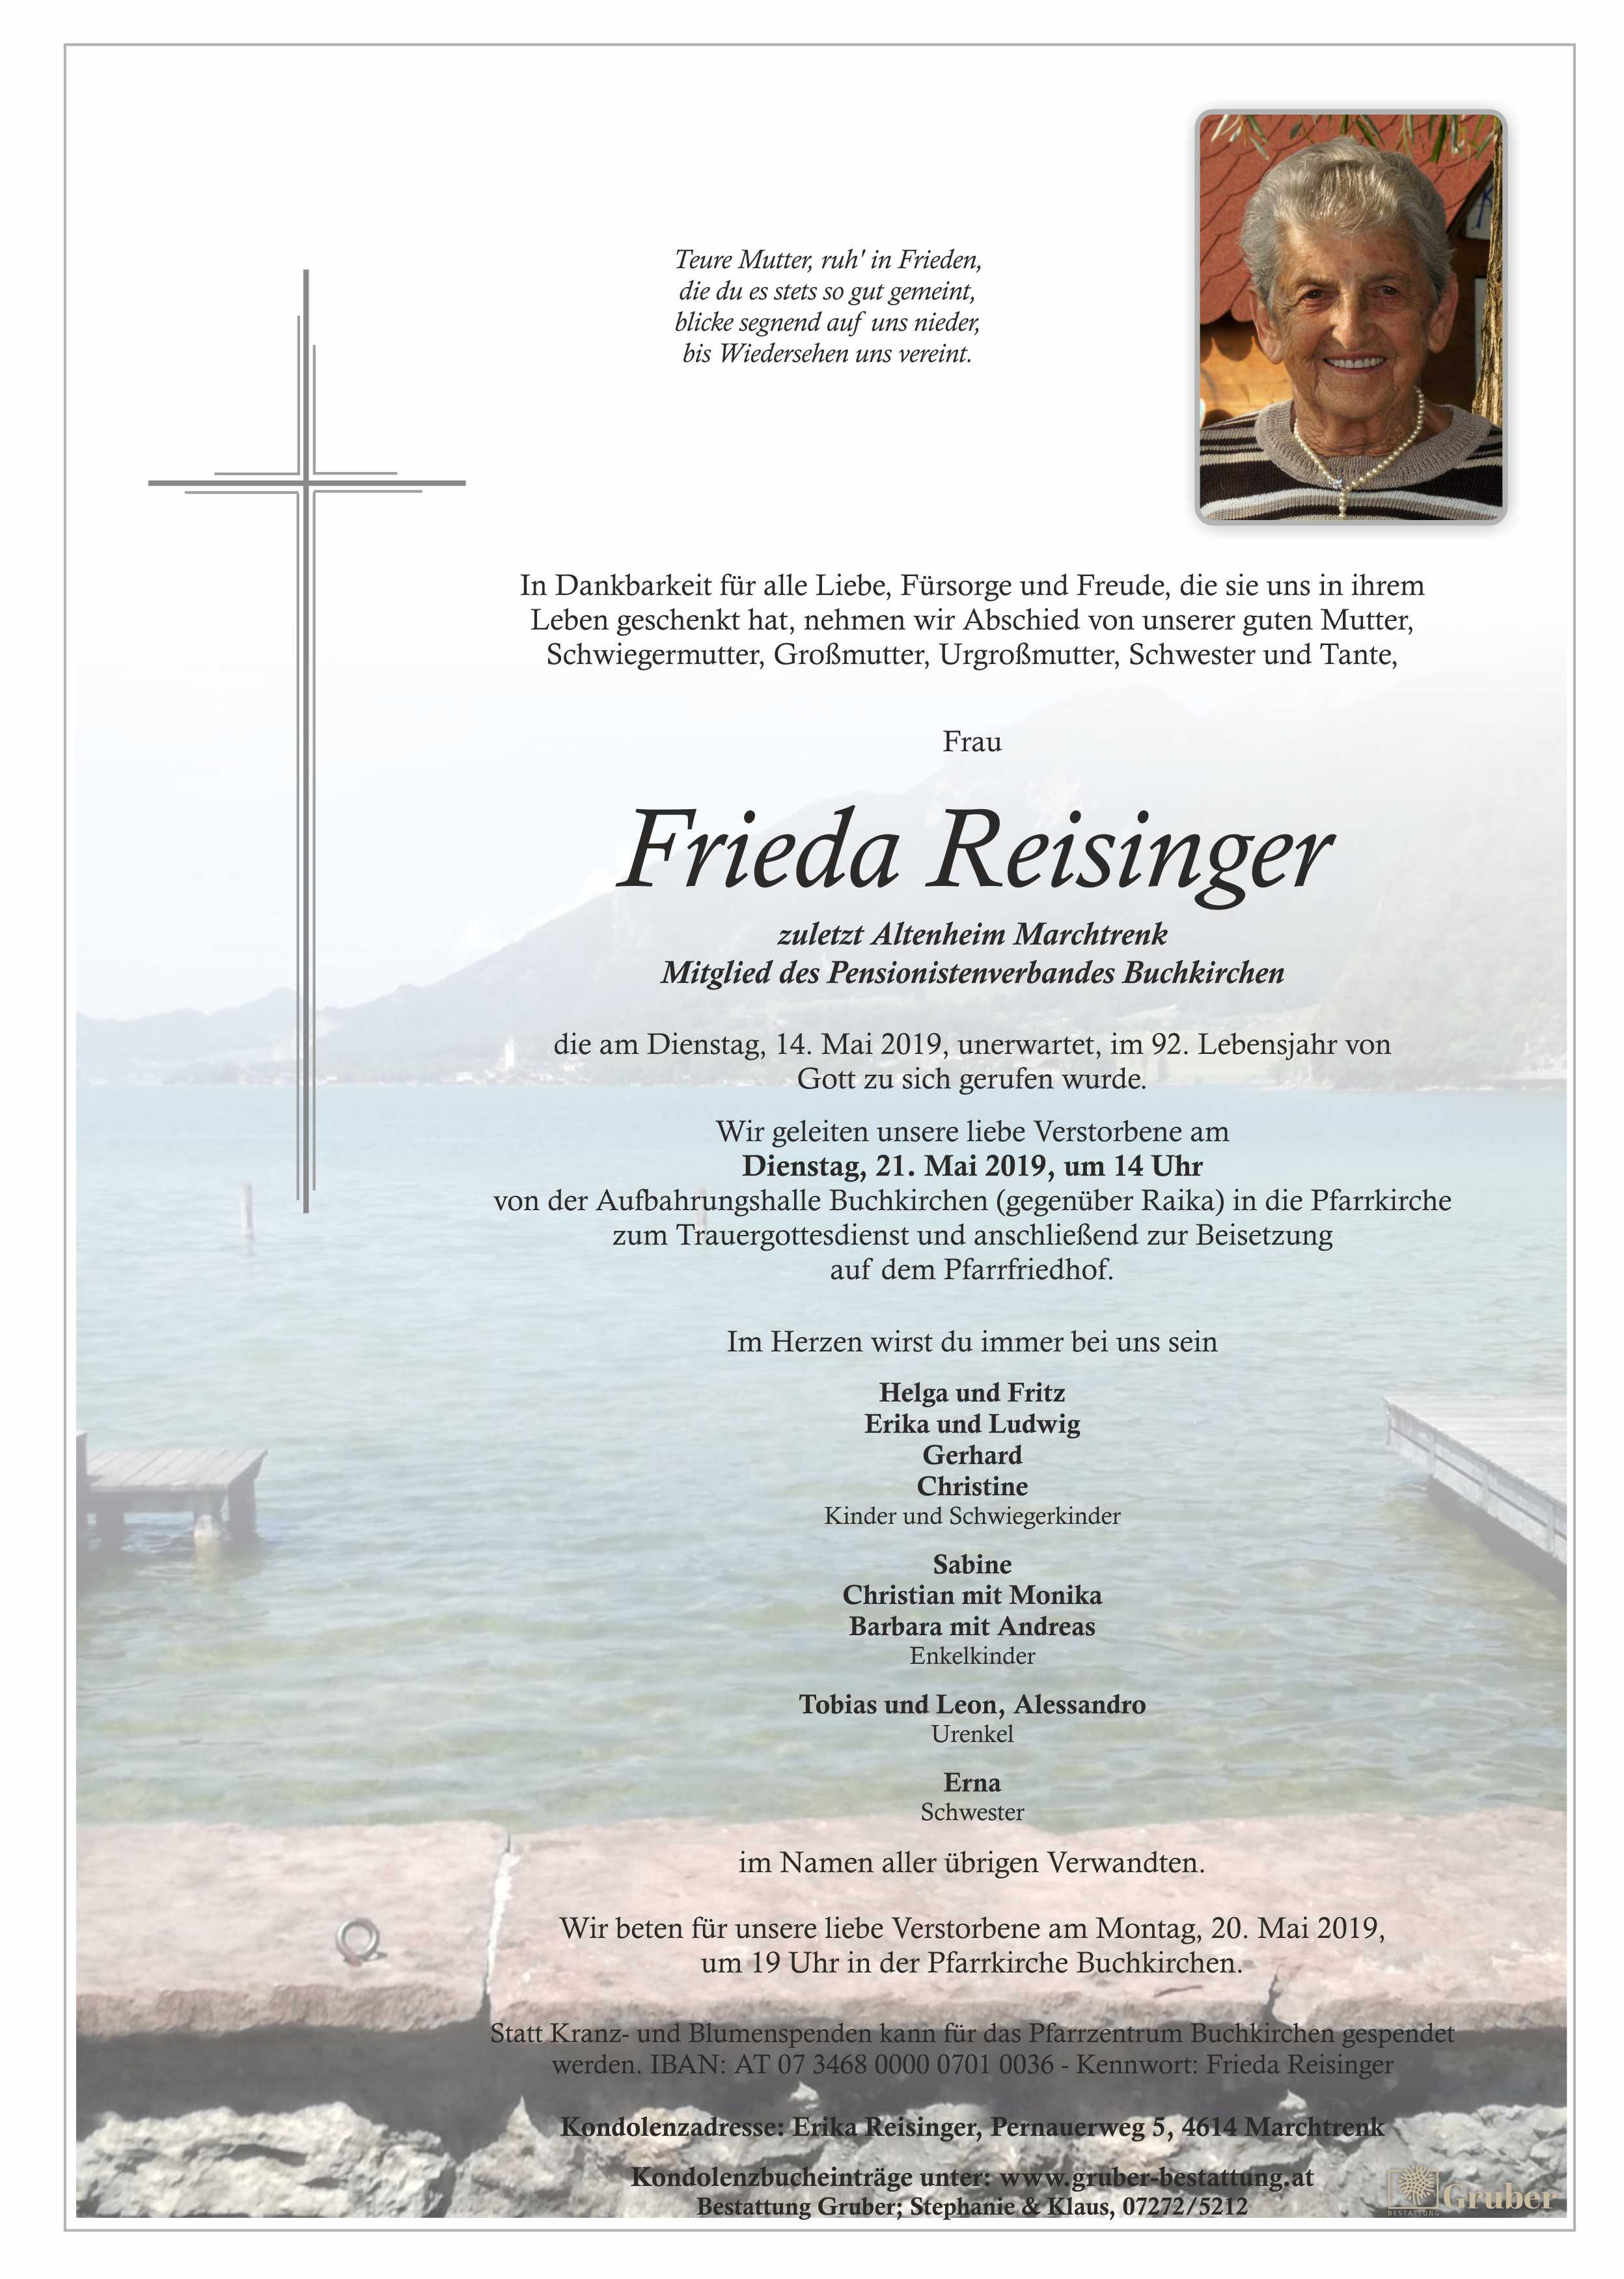 Frieda Reisinger (Buchkirchen)